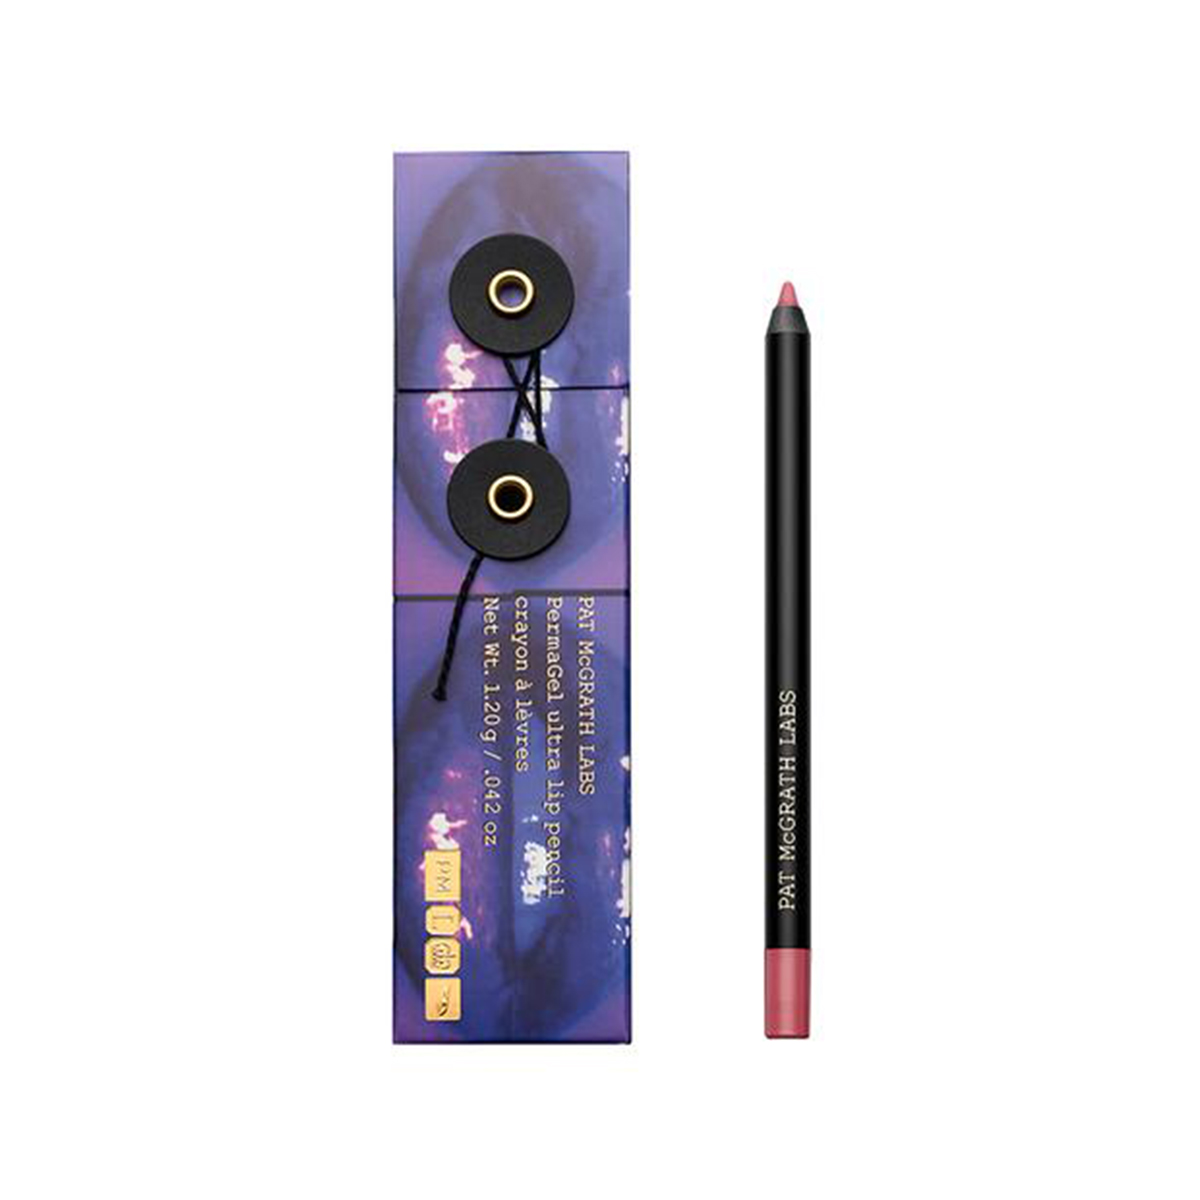 Pat McGrath Labs Permagel Ultra Lip Pencil